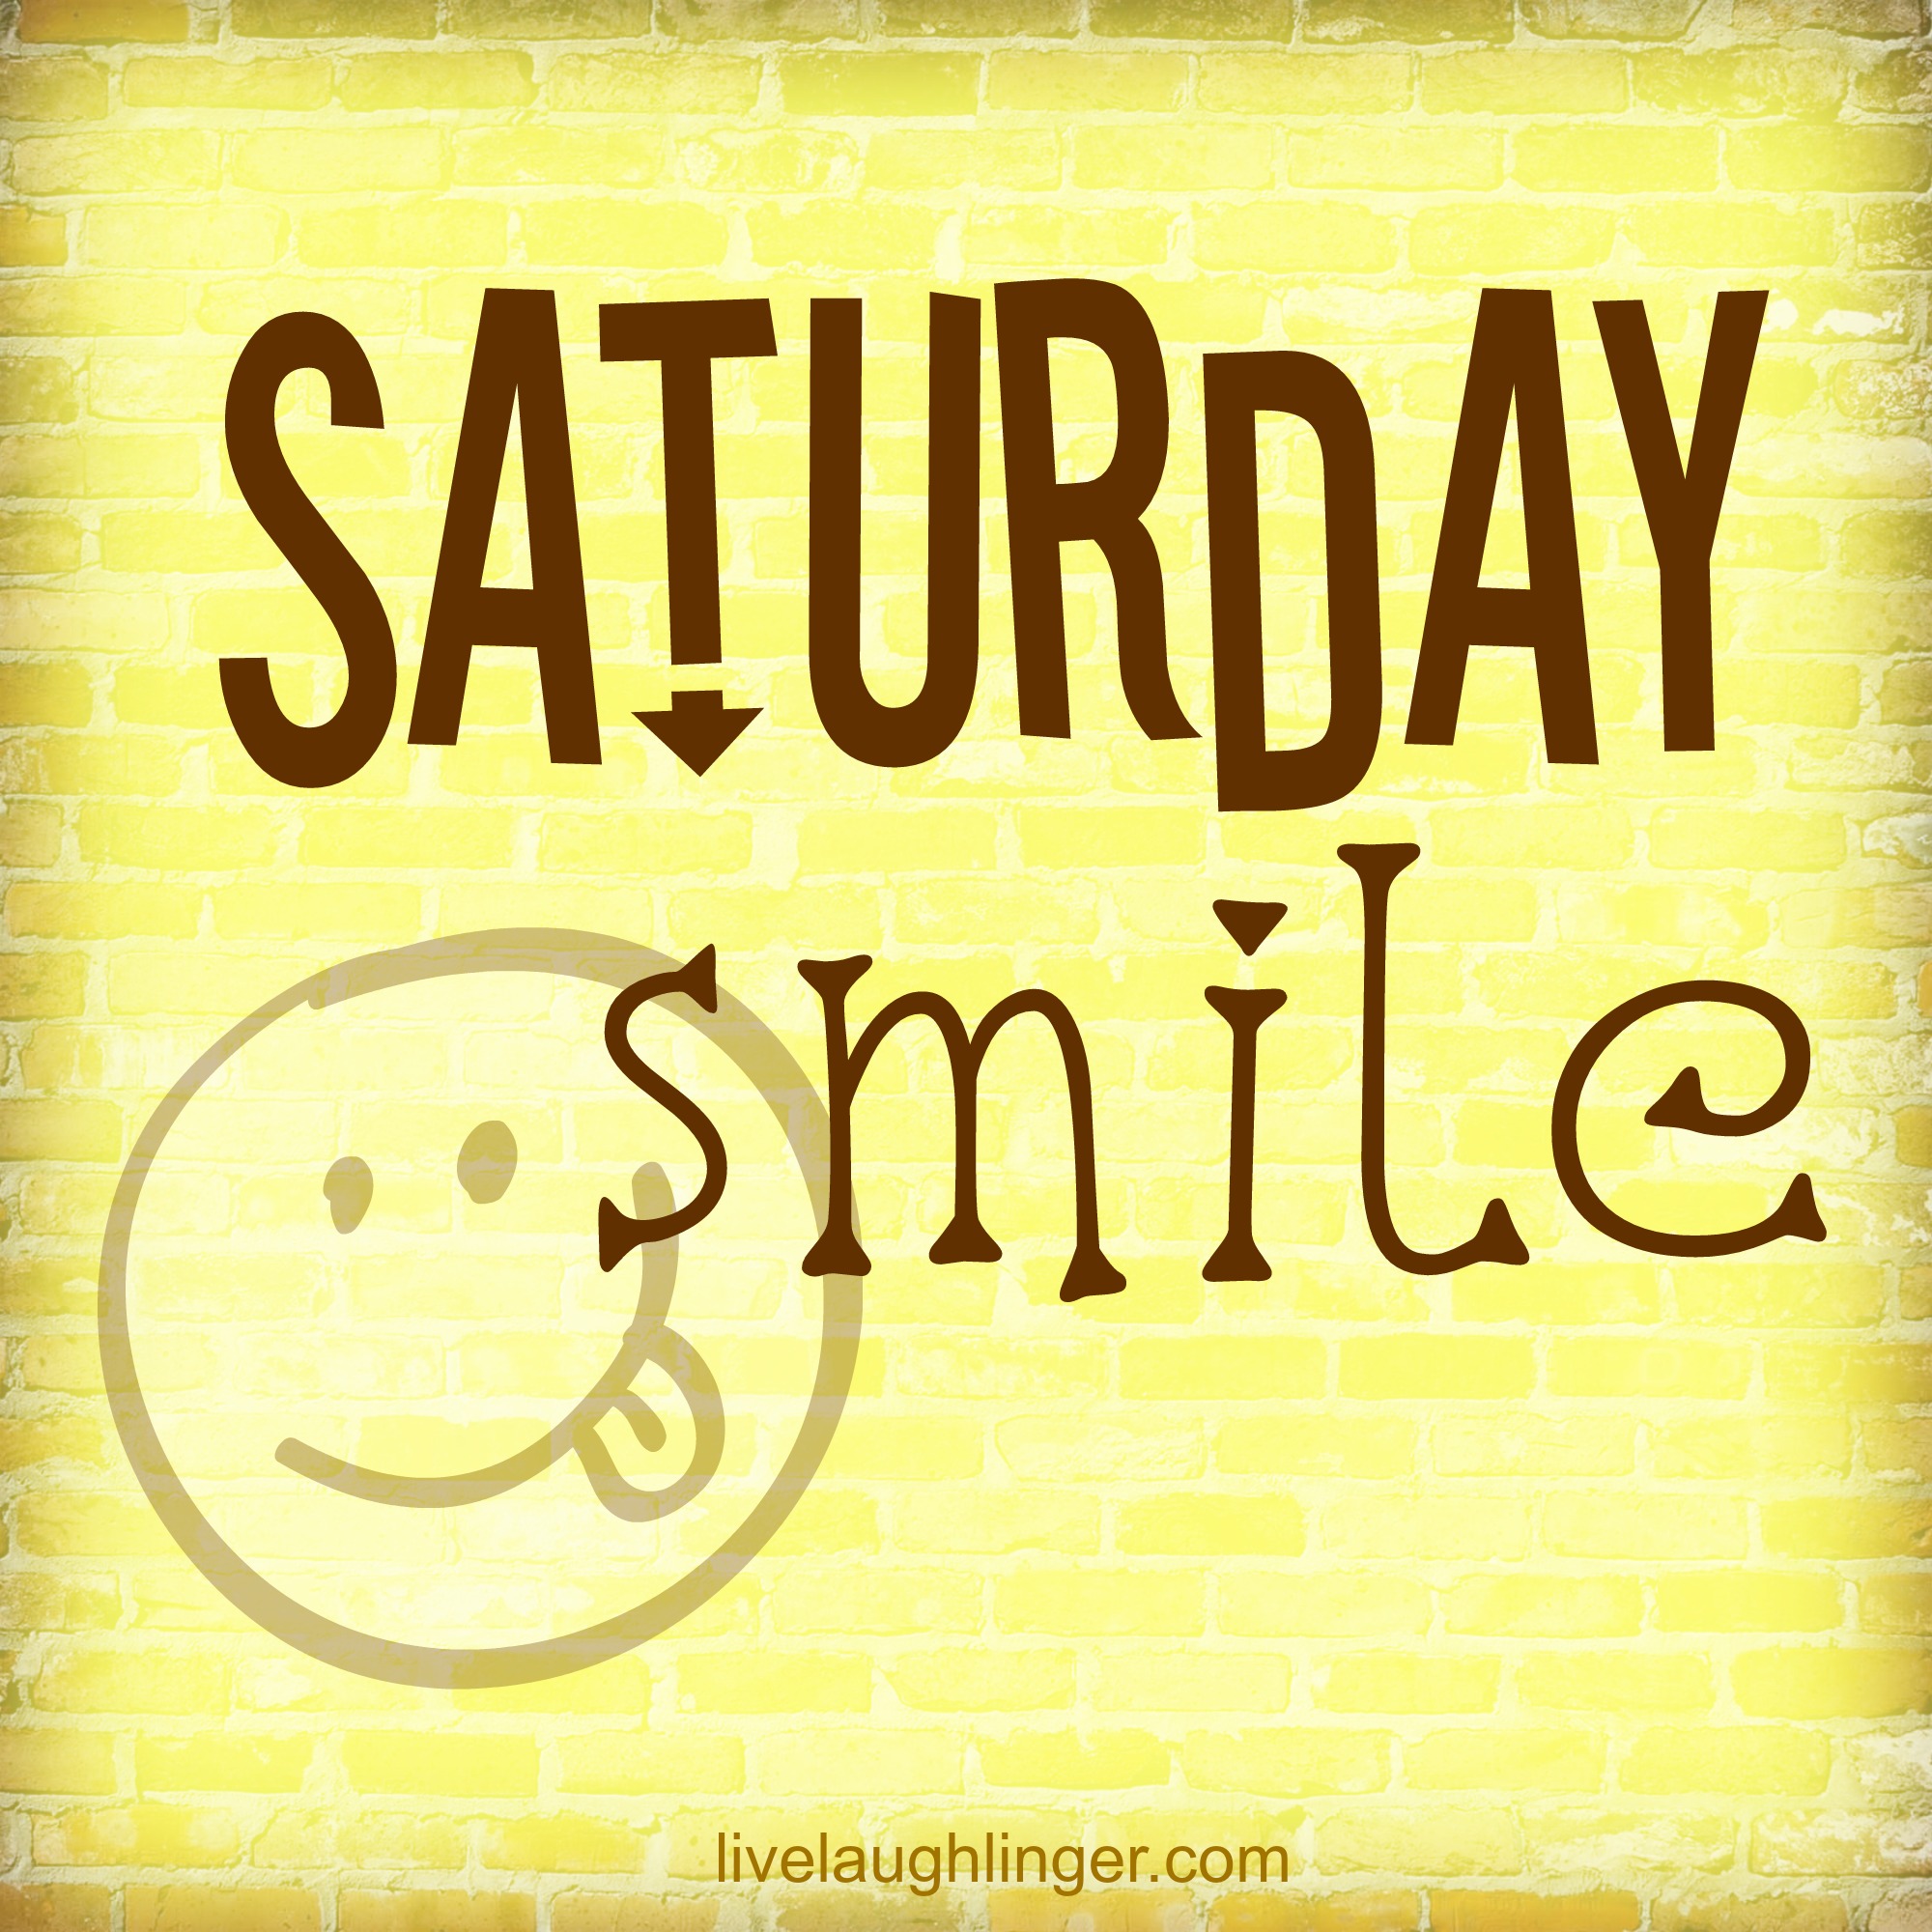 Saturday Smile Wallpaper | PunjabiGraphics.com